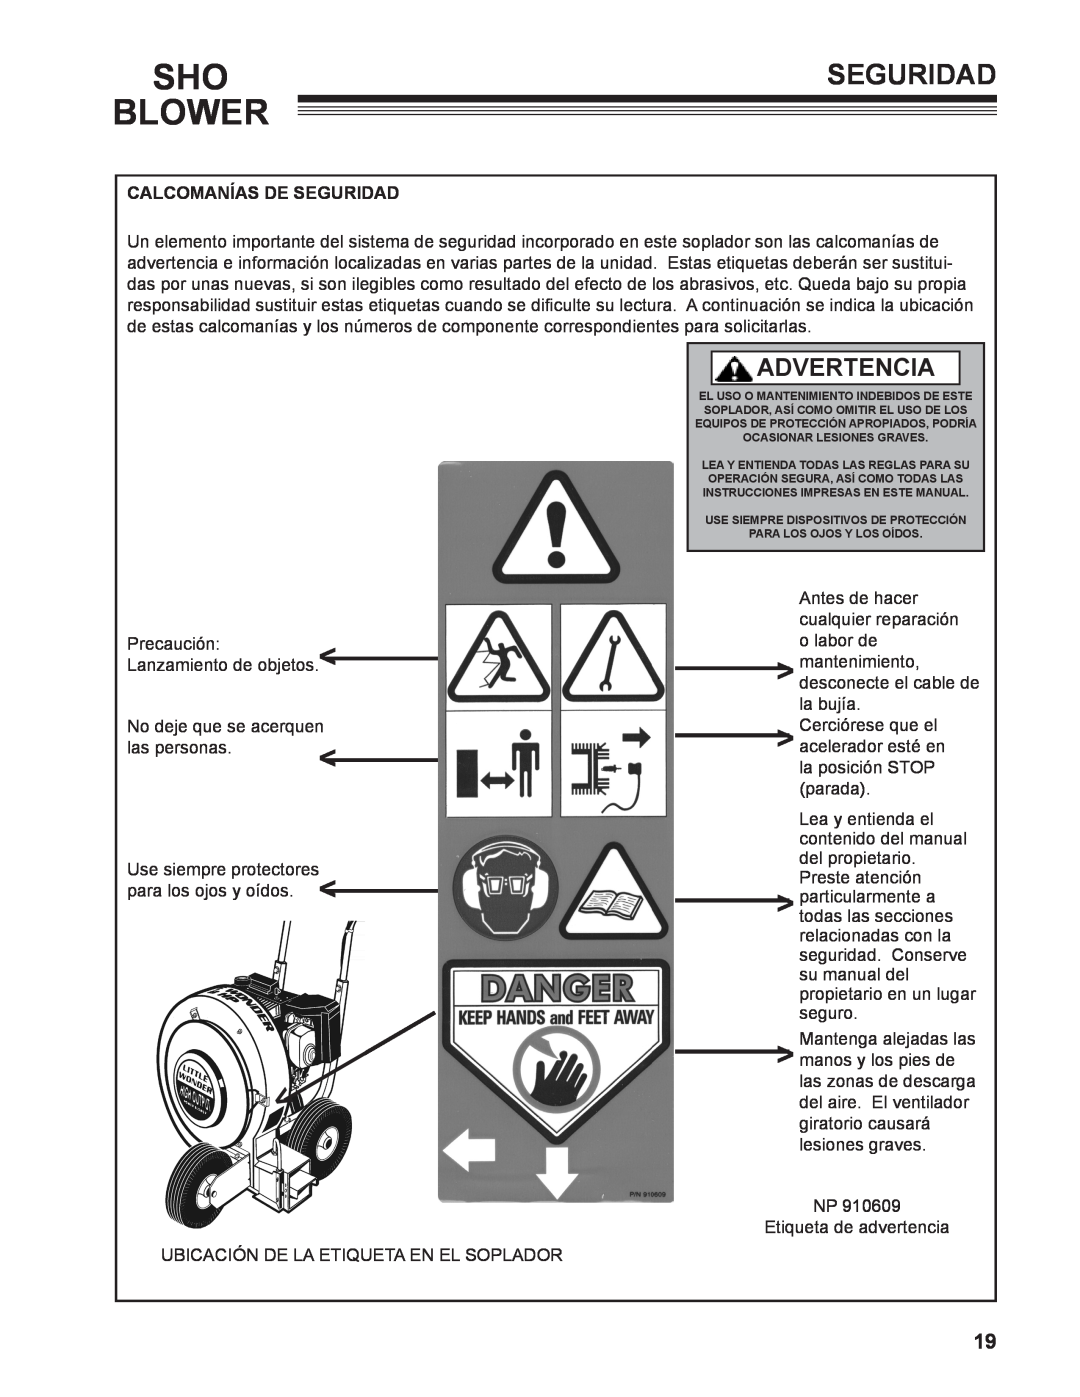 Little Wonder 9502-00-01 technical manual Sho Blower, Advertencia, Calcomanías De Seguridad 